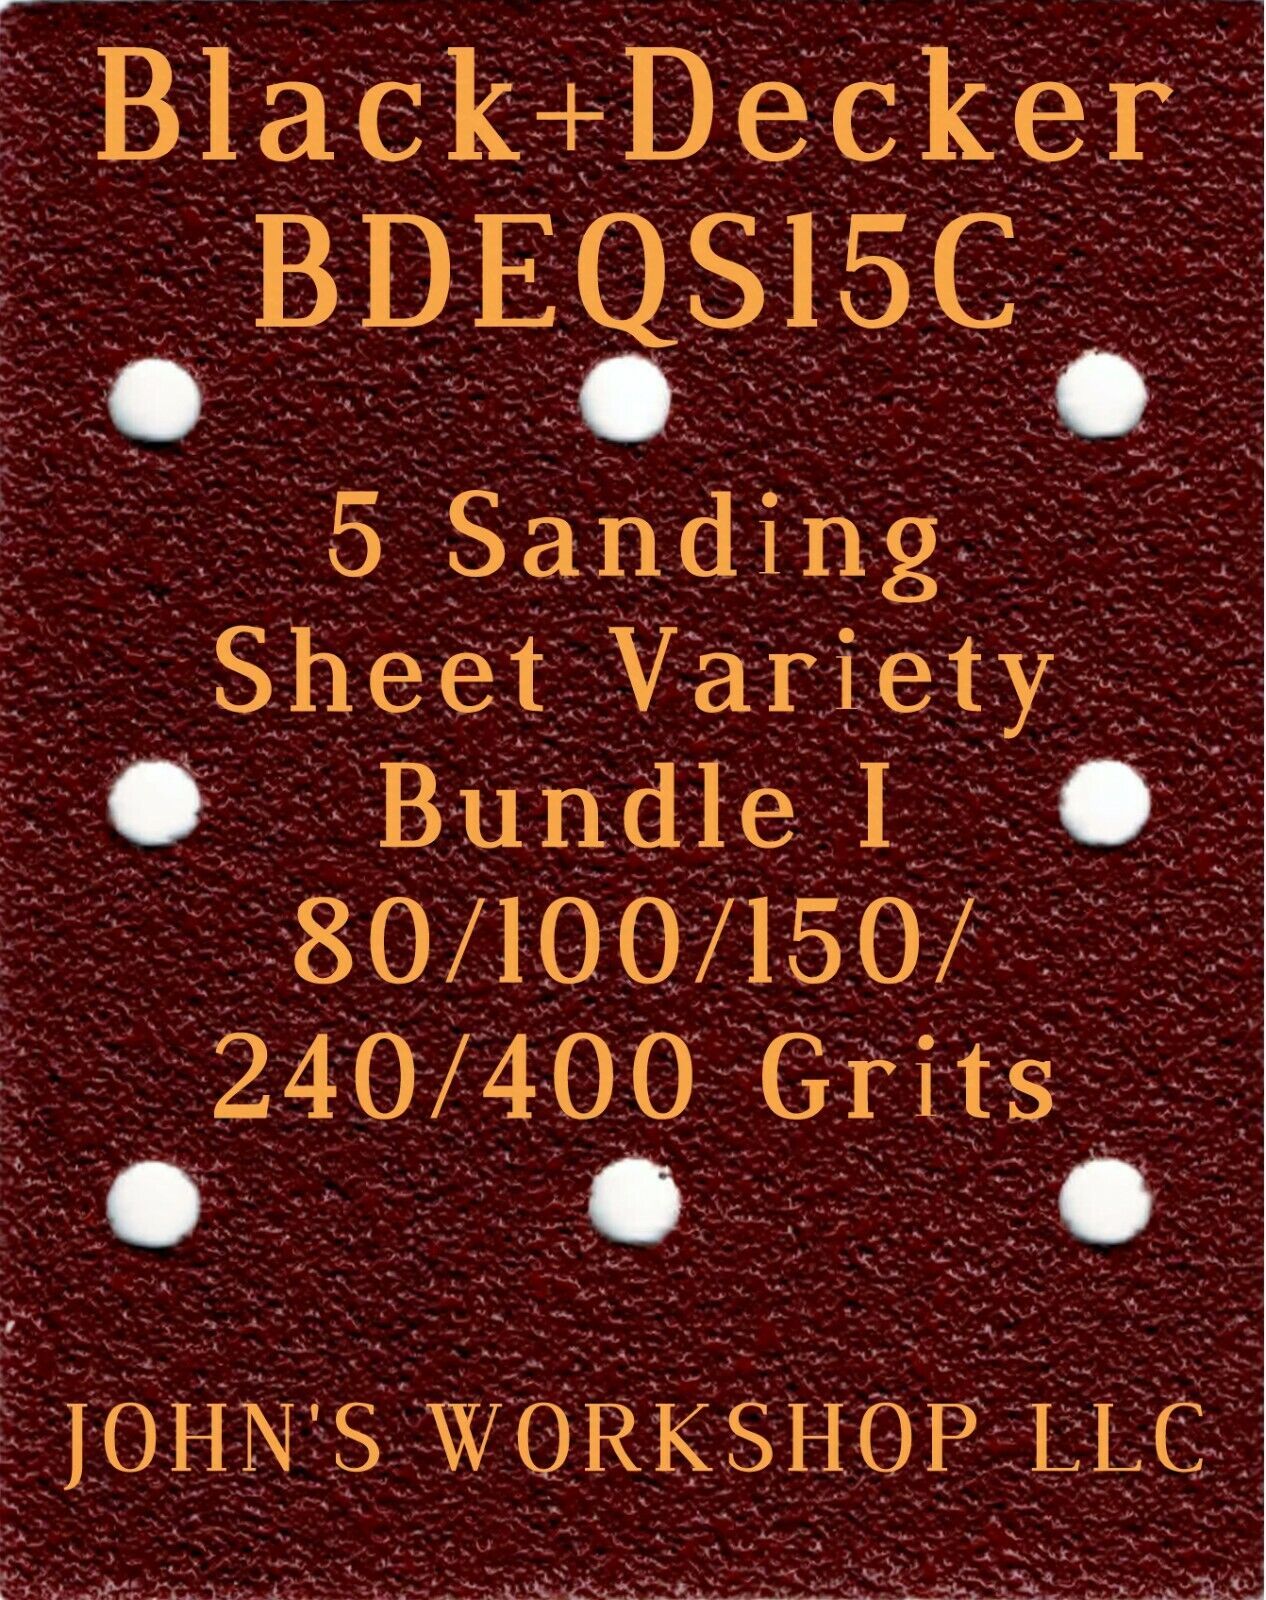 Black+Decker BDEQS15C - 80/100/150/240/400 Grits - 5 Sandpaper Variety Bundle I - $4.99